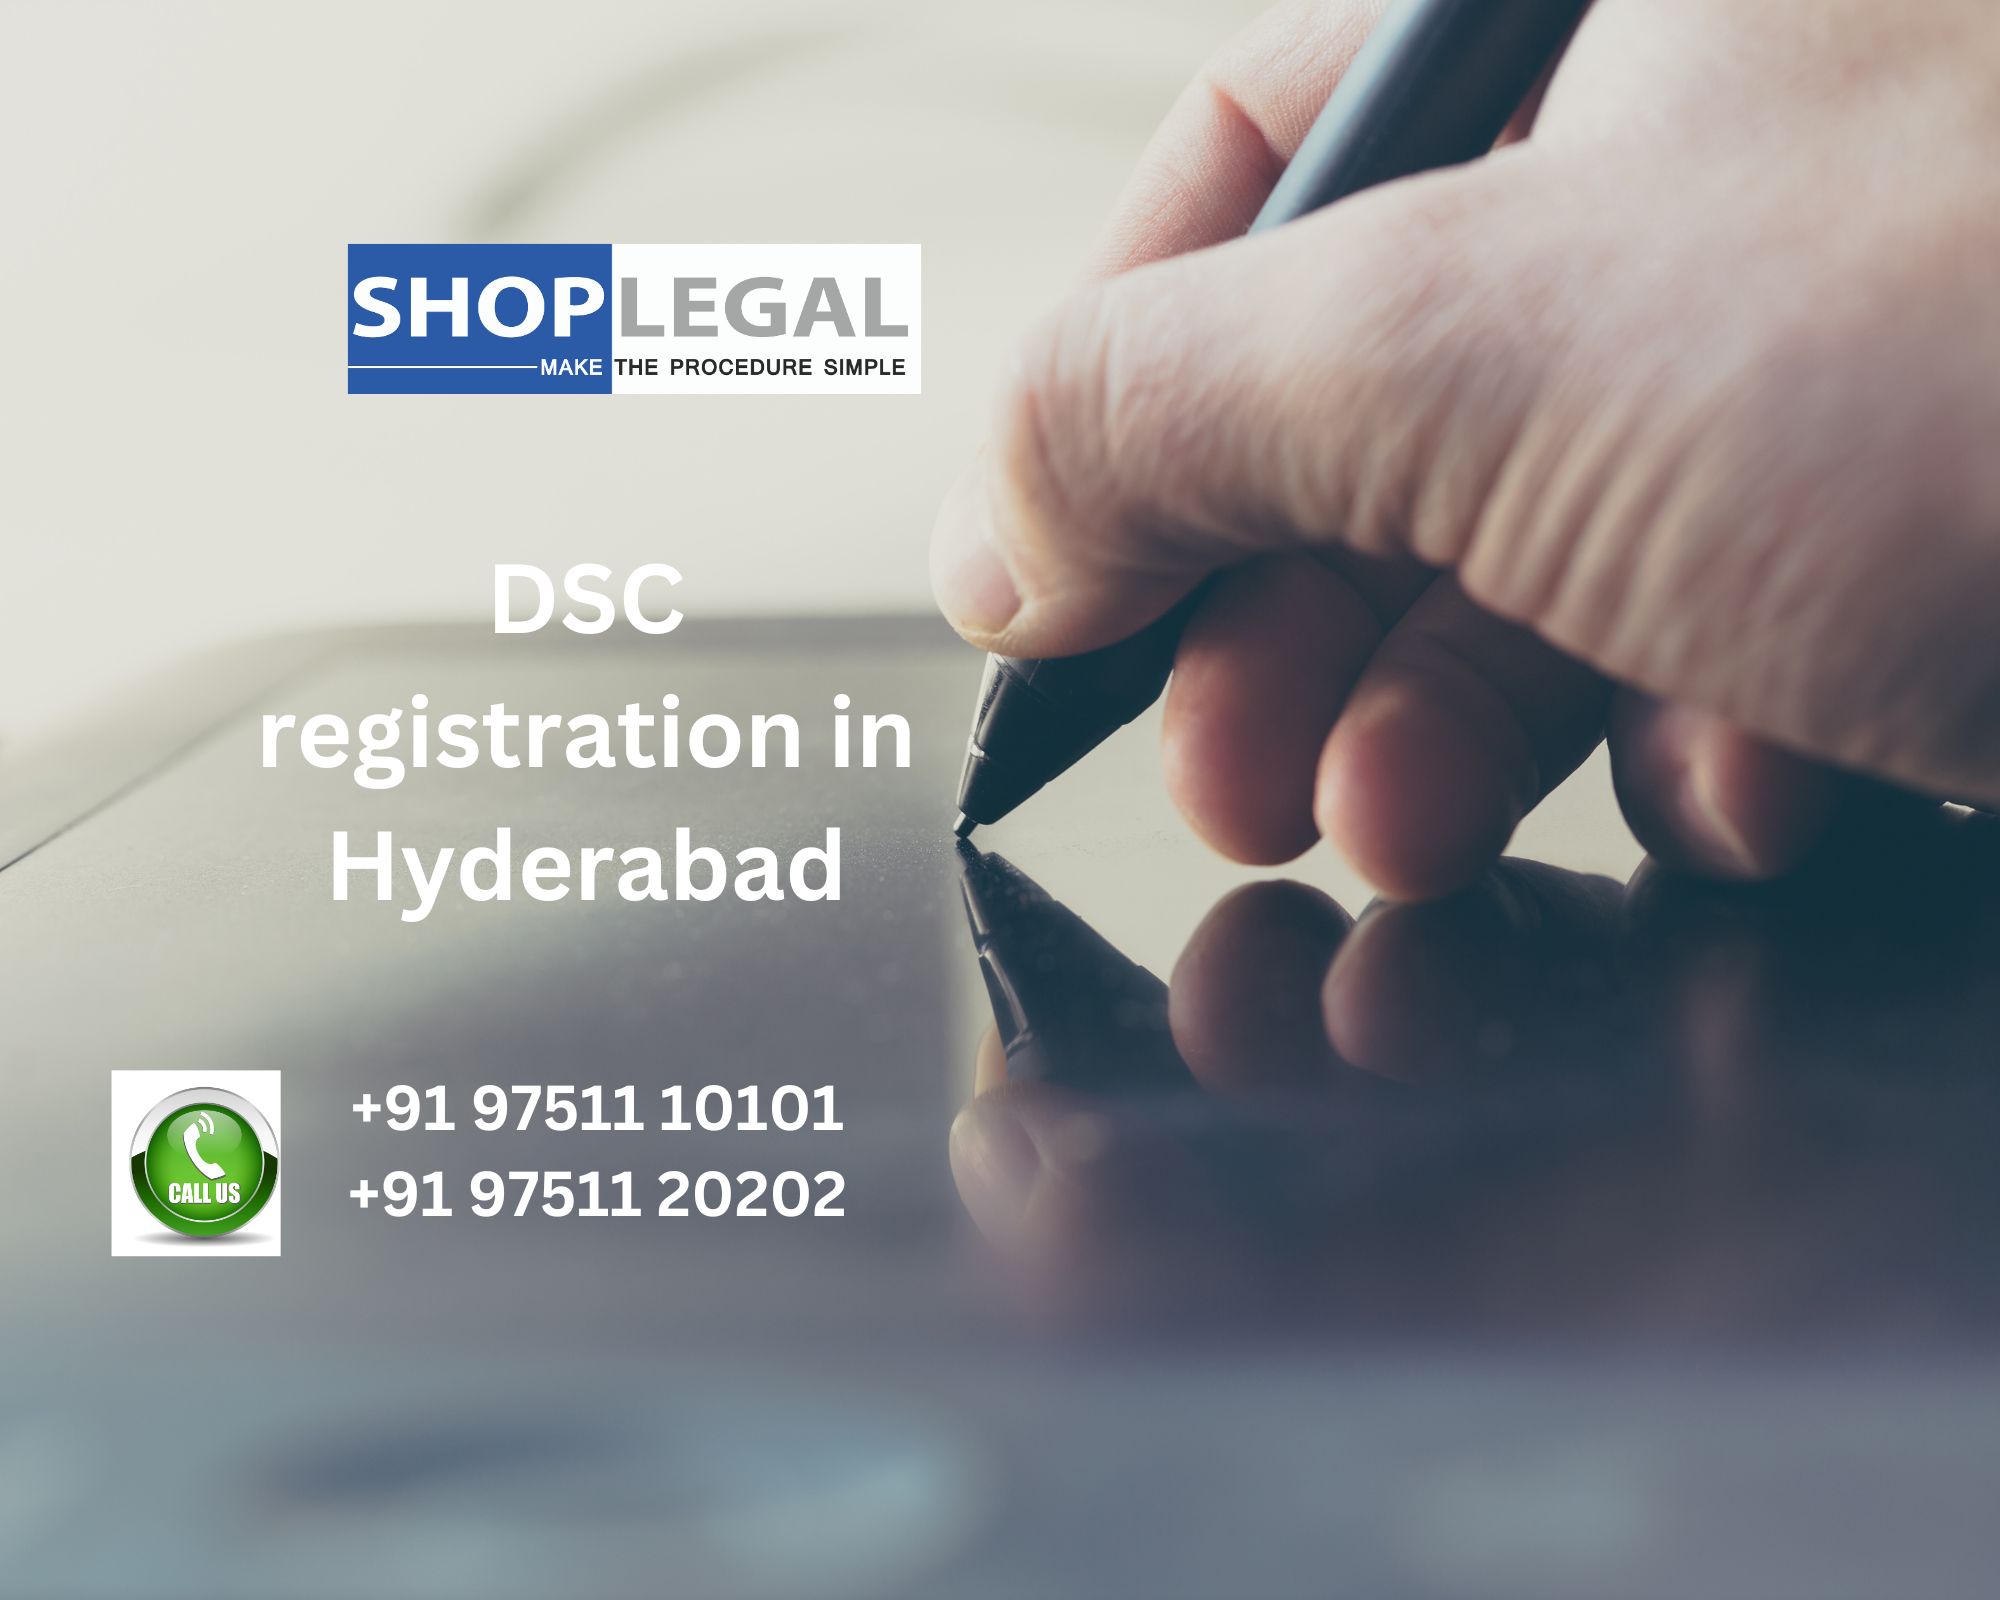 DSC registration in Hyderabad